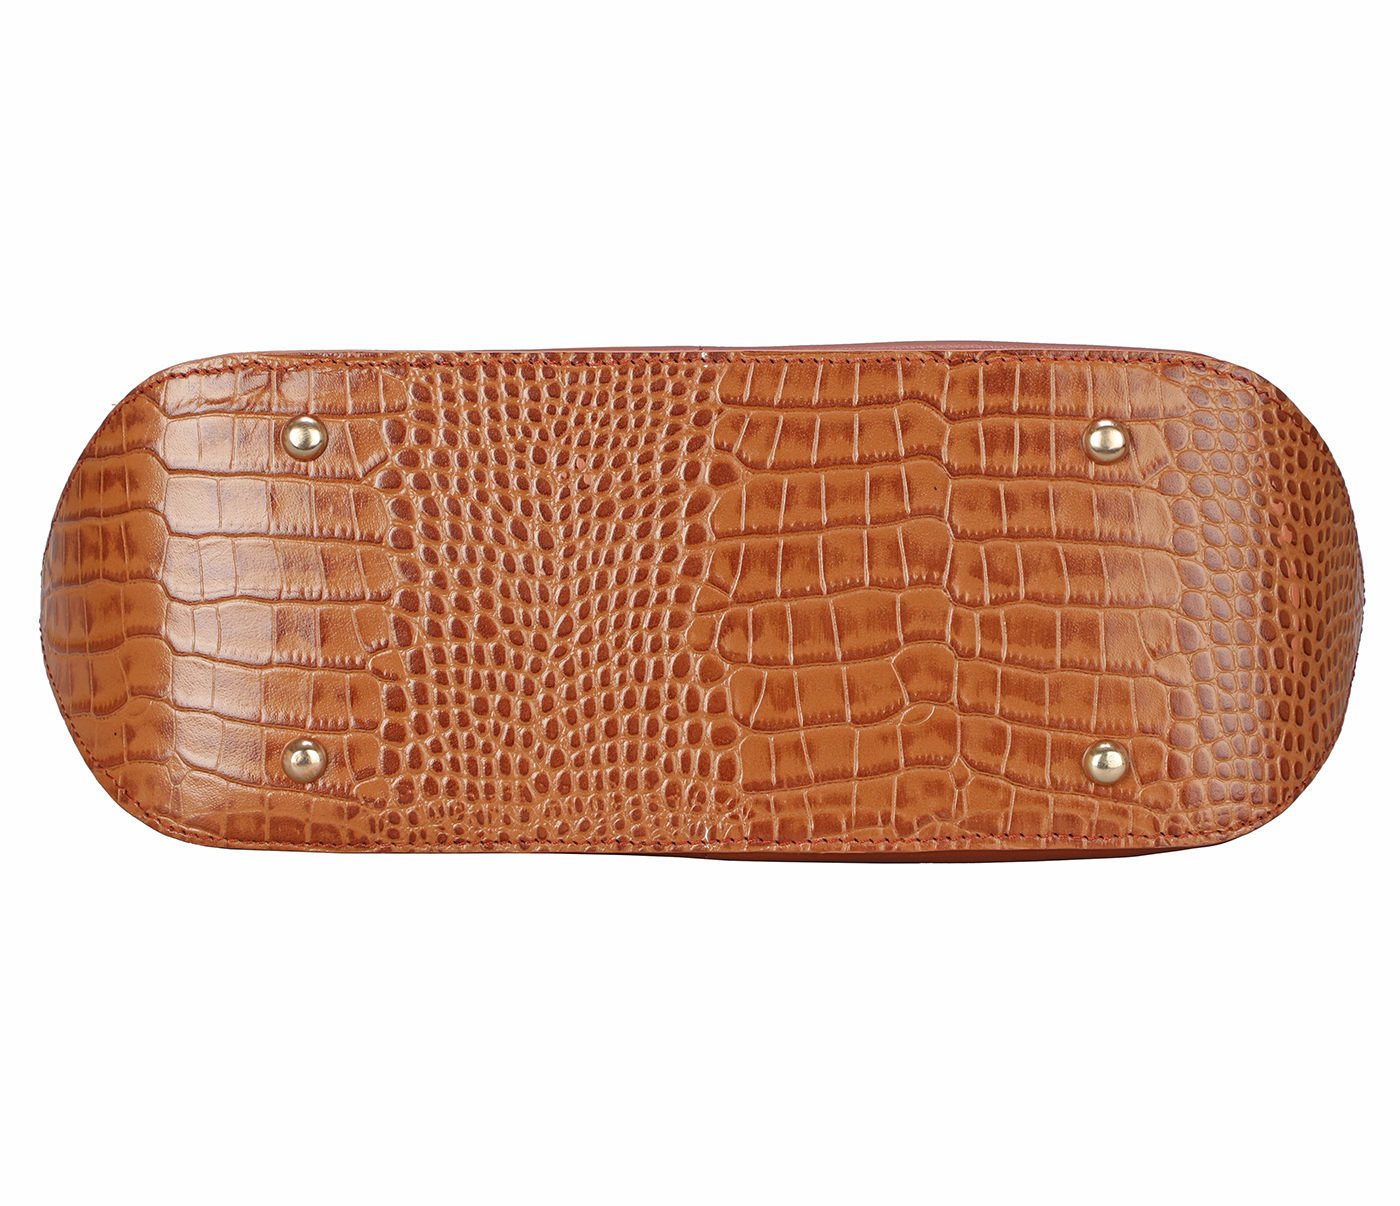 B877-Norita-Shoulder work bag in Genuine Leather - Tan